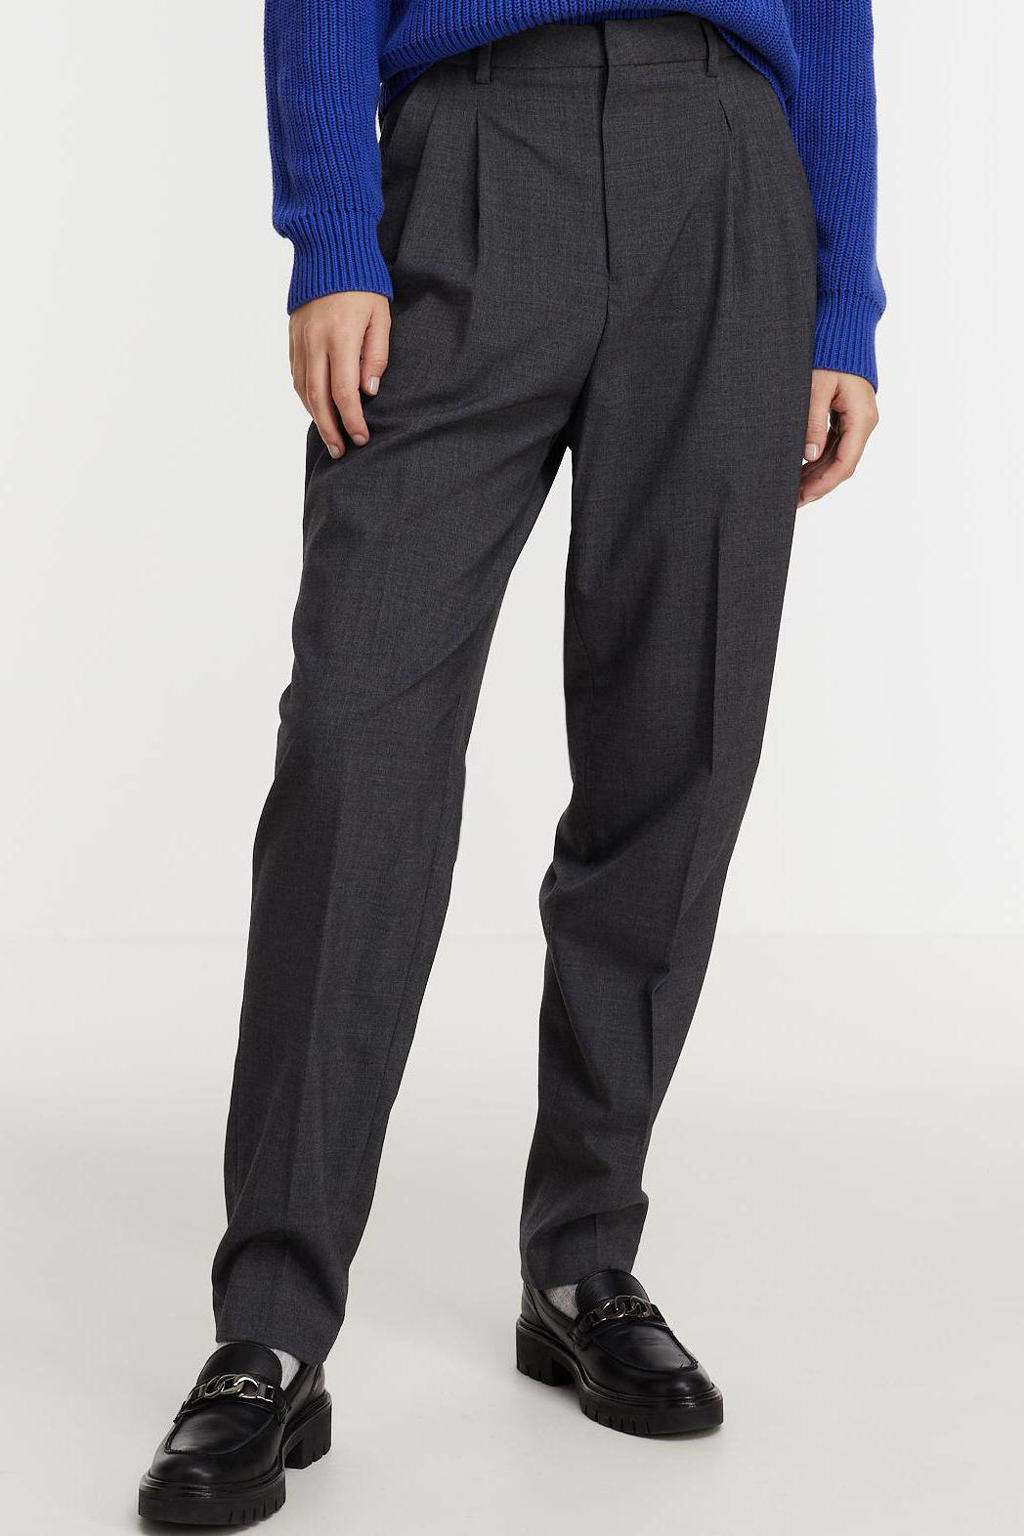 Grijze dames Scotch & Soda gemêleerde high waist tapered fit pantalon van polyester met rits- en haaksluiting